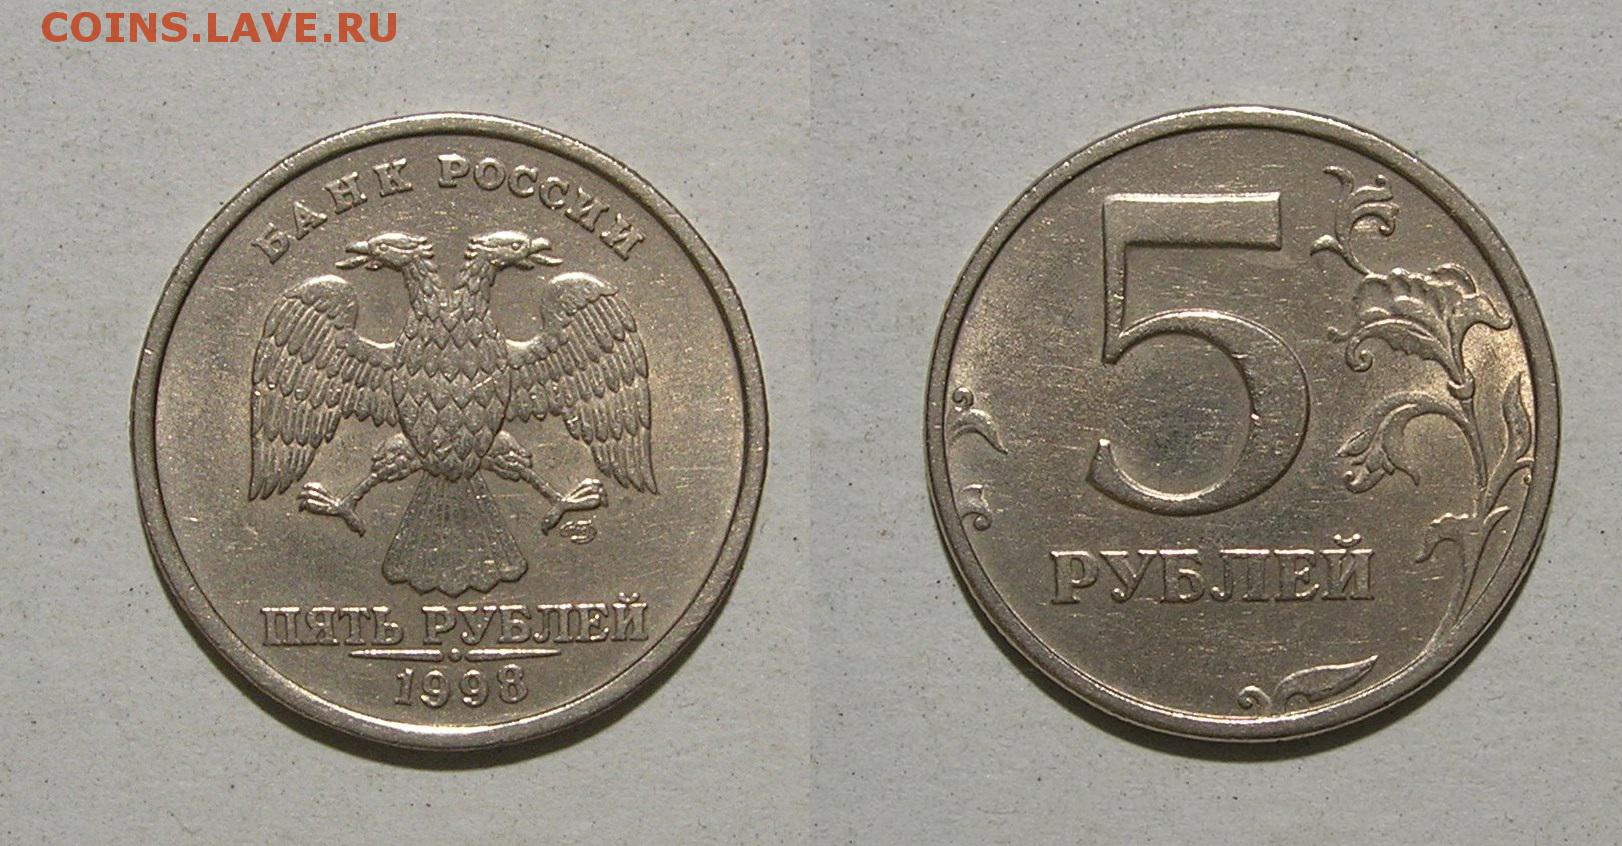 Масса 5 рублей. 5 Рублей 1997 СПМД шт 3. Монета 5 рублей 1997 ММД. 5 Рублей 1997 СПМД монетник. 5 Рублей 1998 вес.